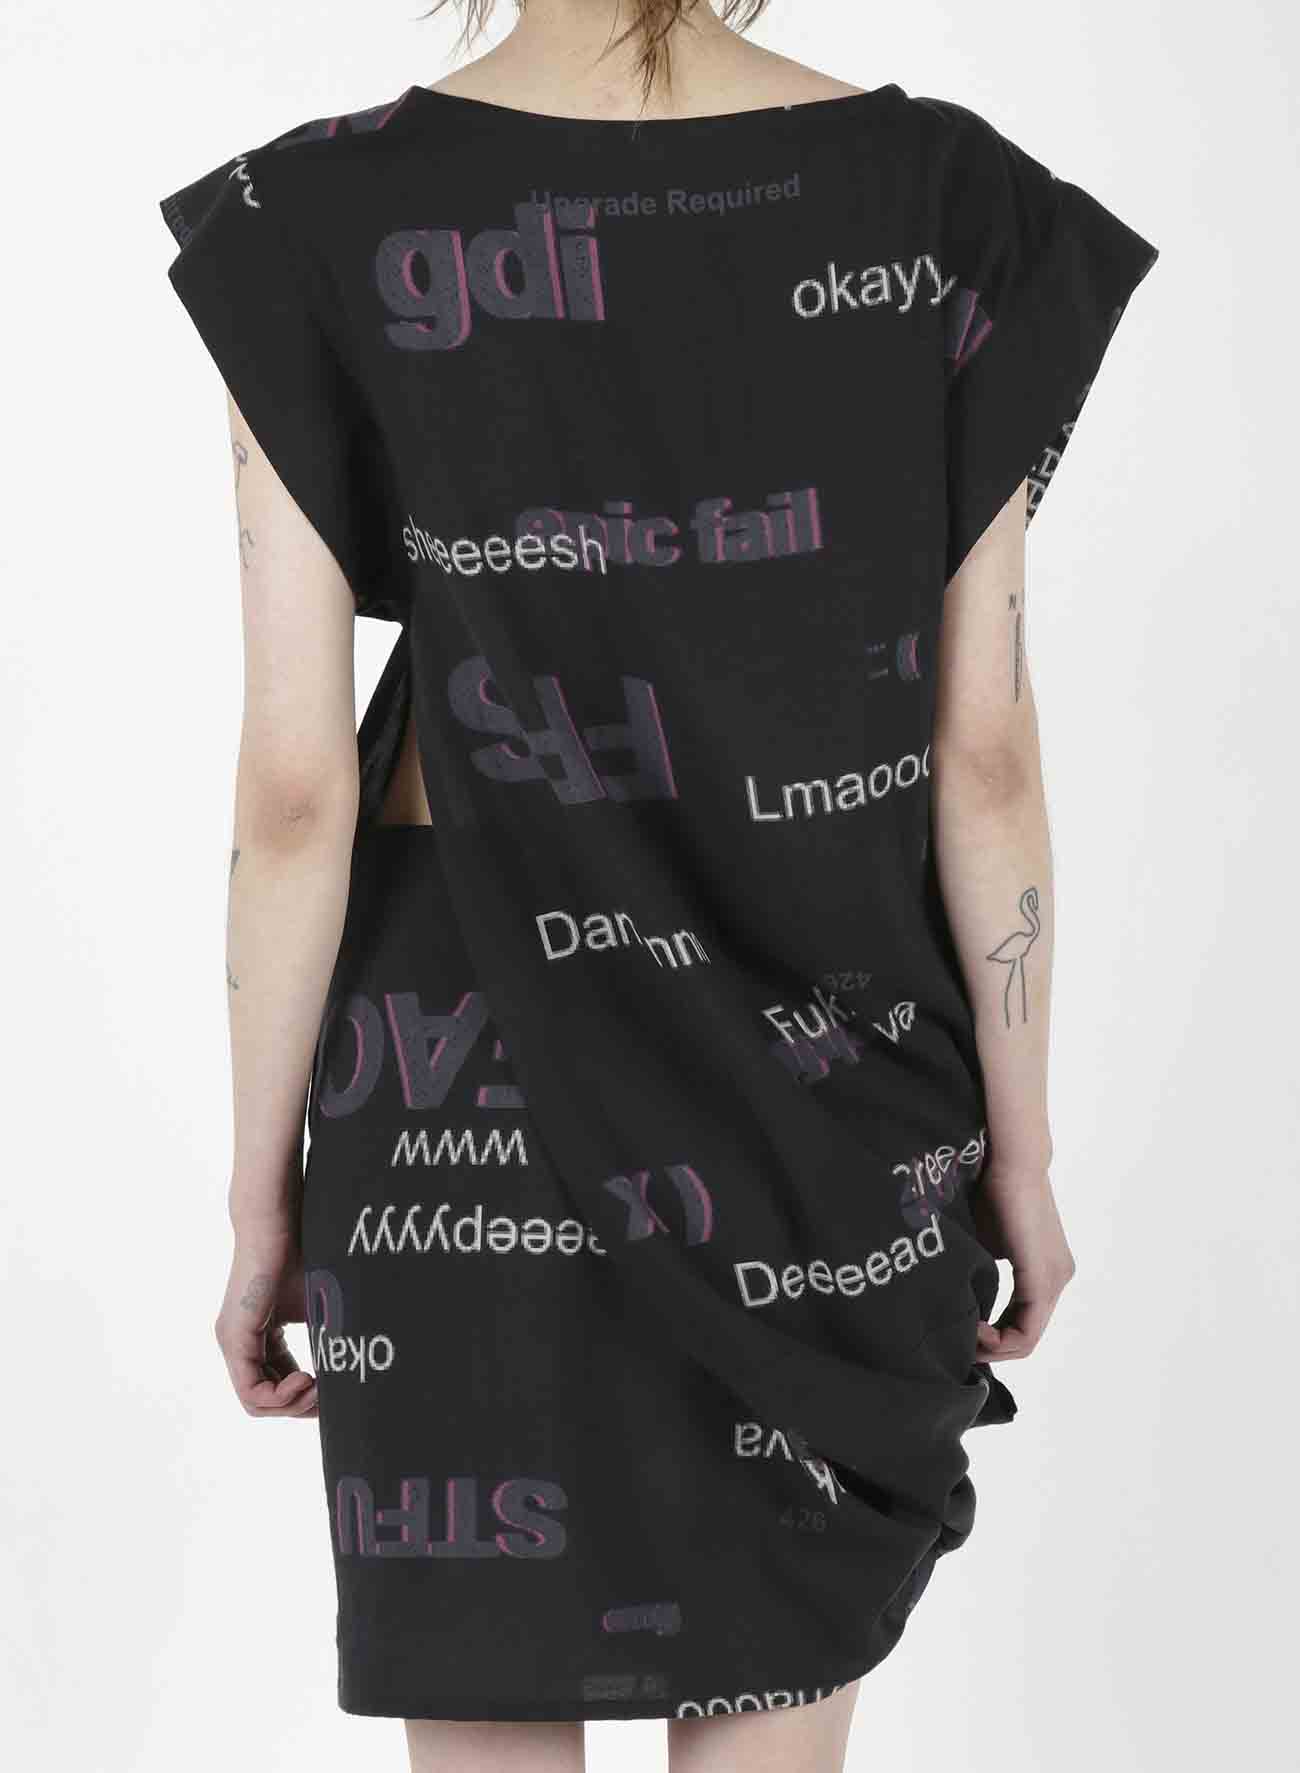 Net Slang Print B Cross Side Dress